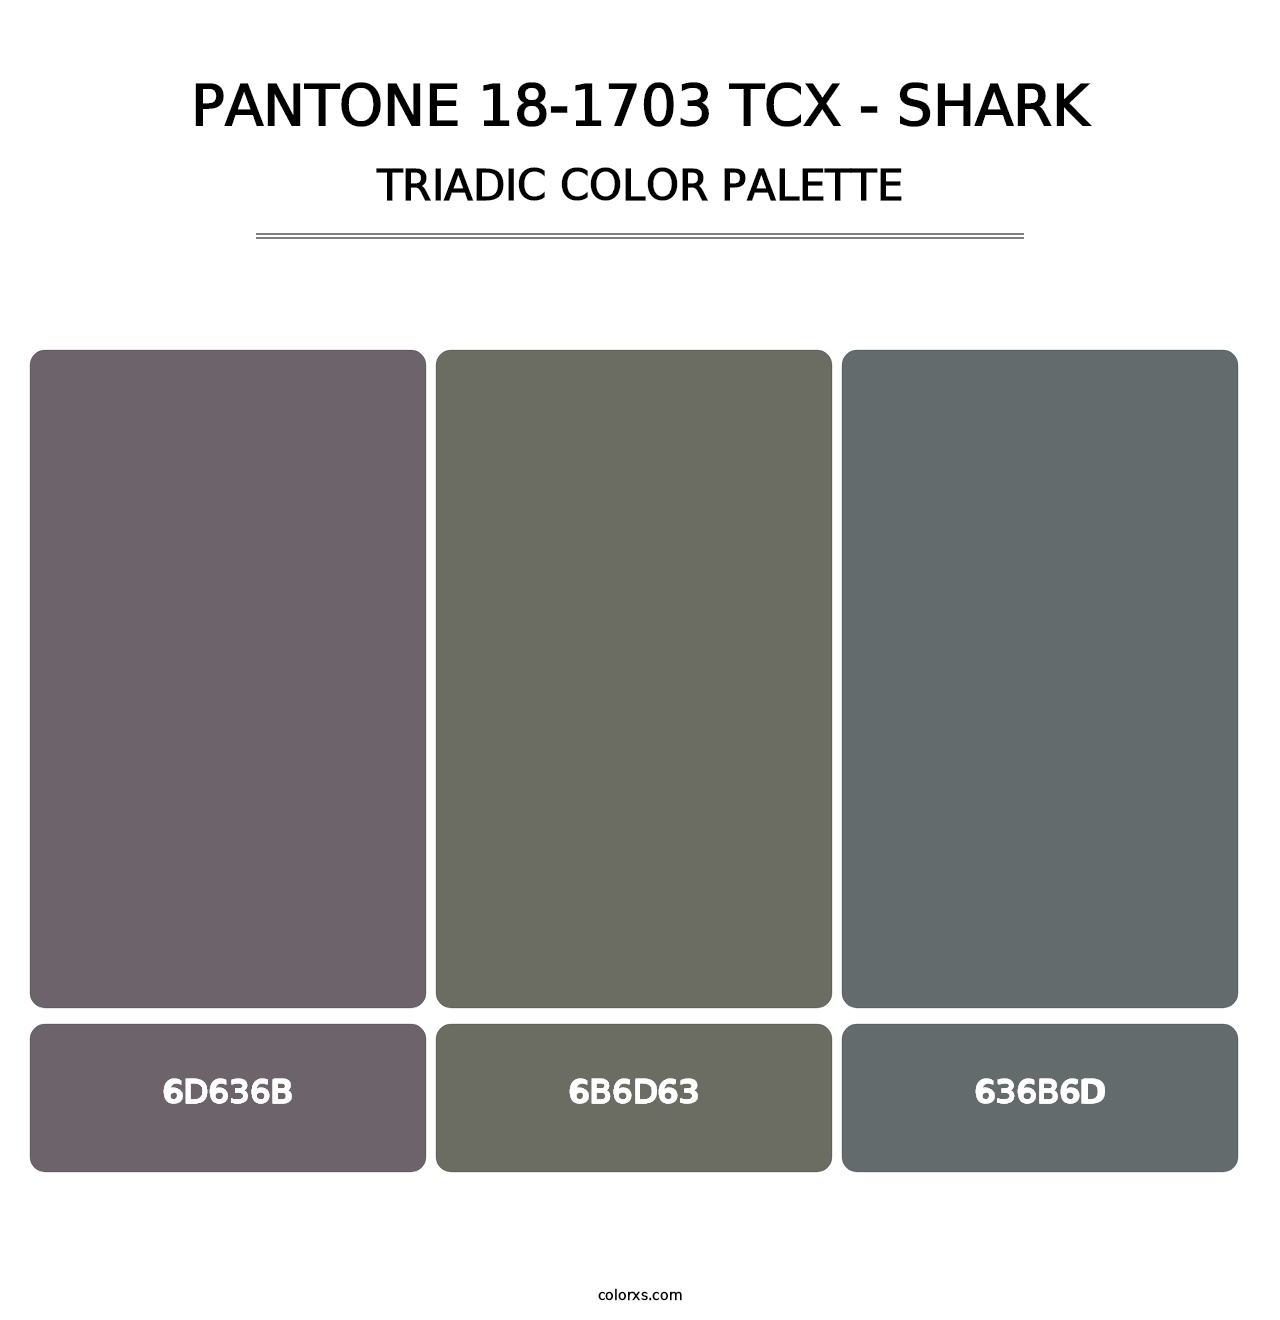 PANTONE 18-1703 TCX - Shark - Triadic Color Palette